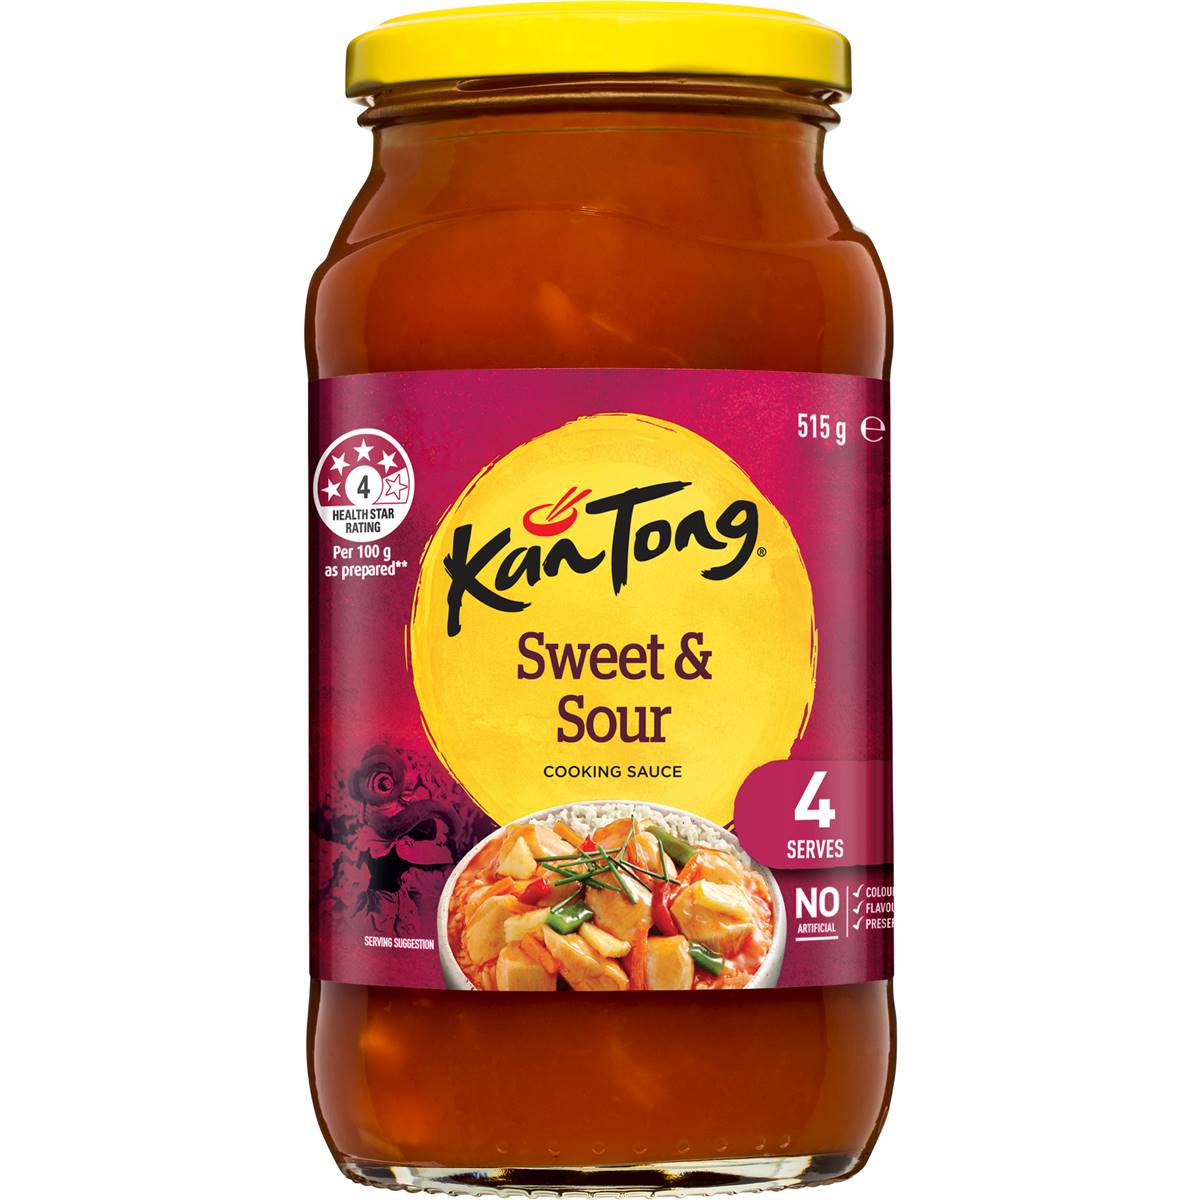 KanTong Sauce Sweet & Sour 515g